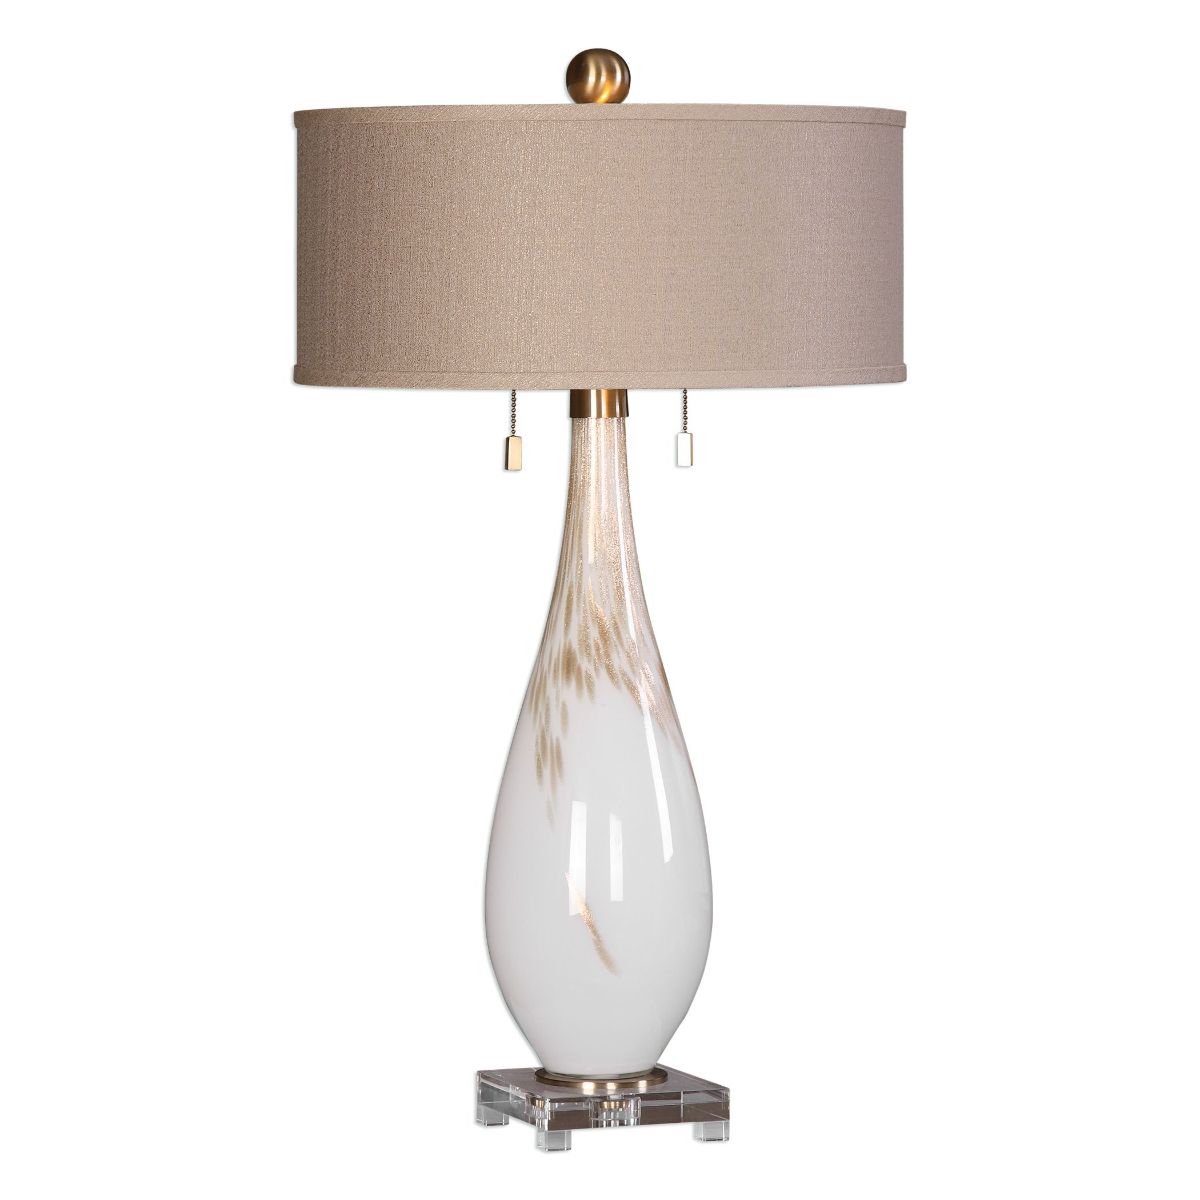 Uttermost Cardoni White Glass Table Lamp